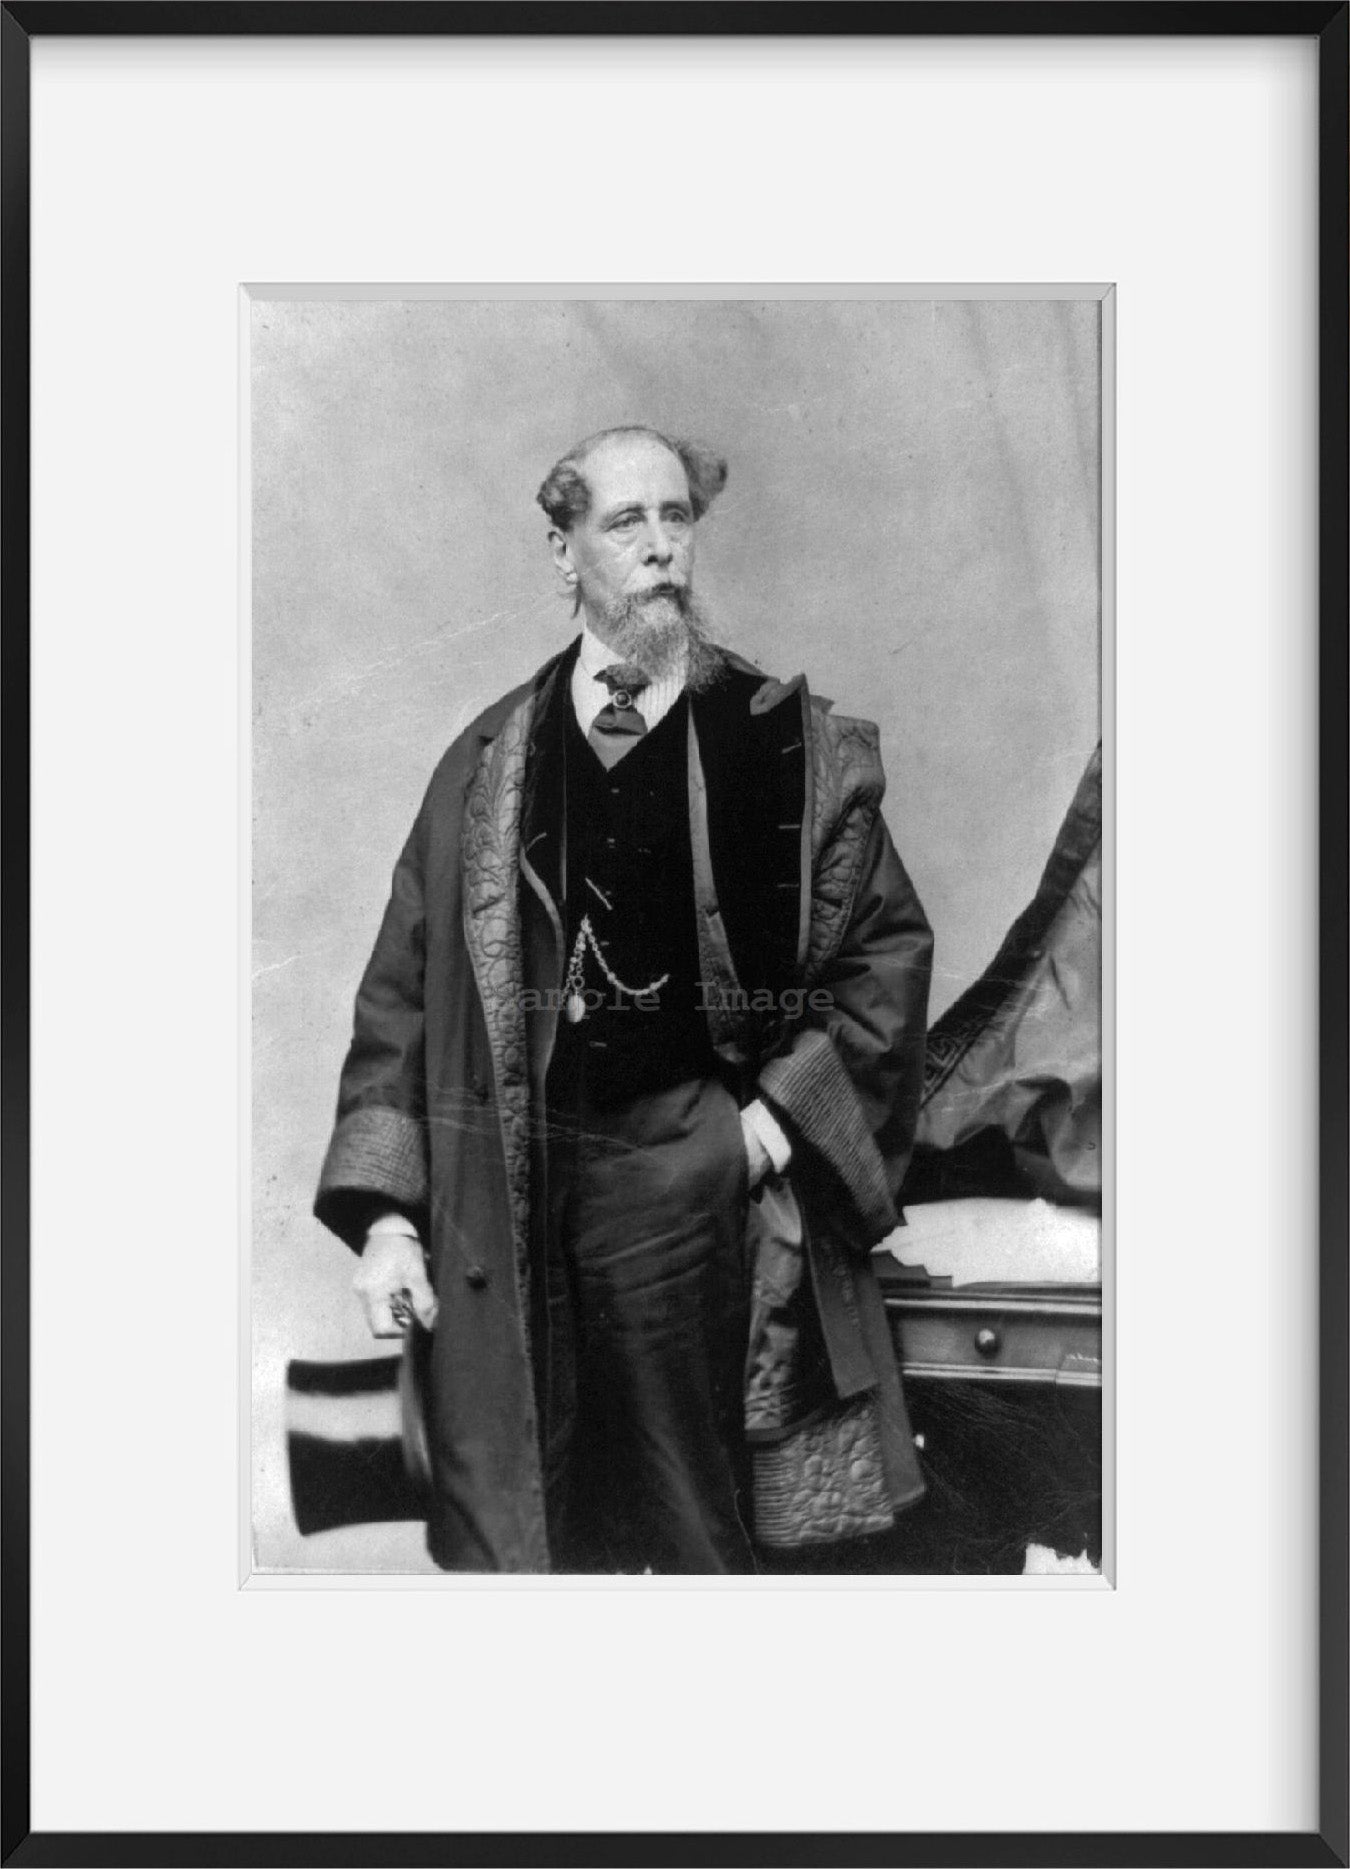 1867 photograph of Charles Dickens Summary: Three-quarter.